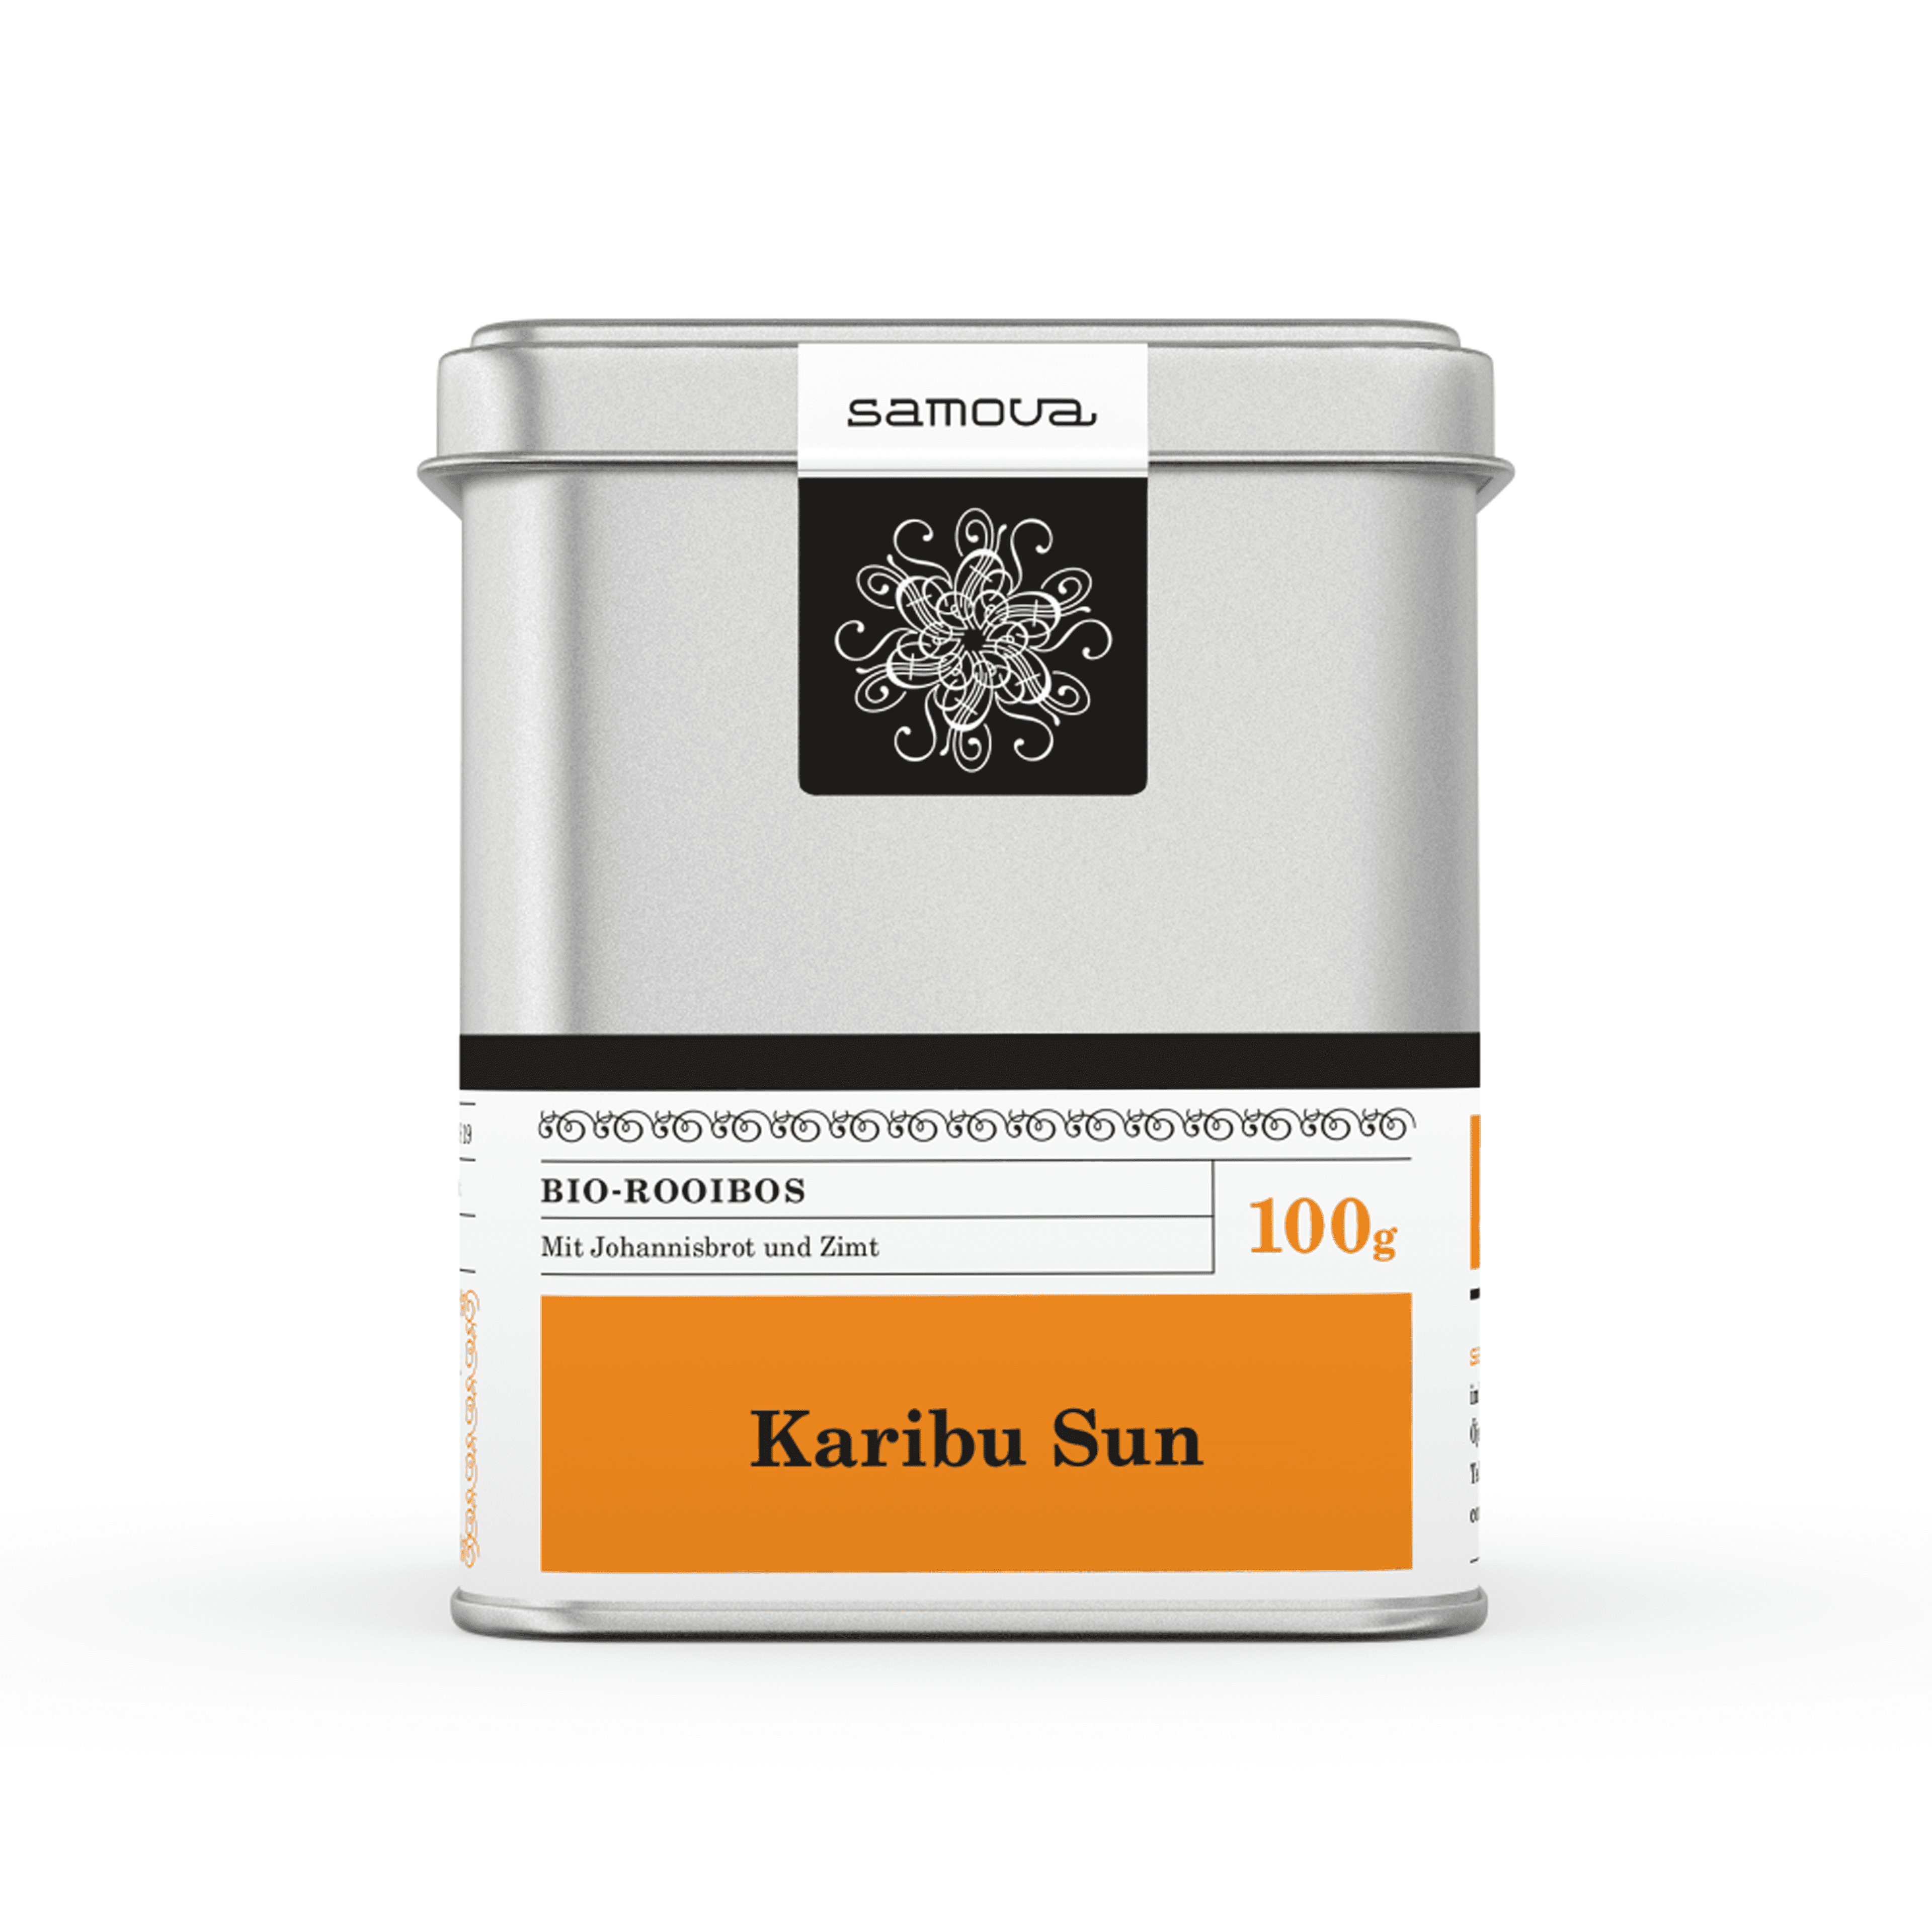 Can of Karibu Sun tea